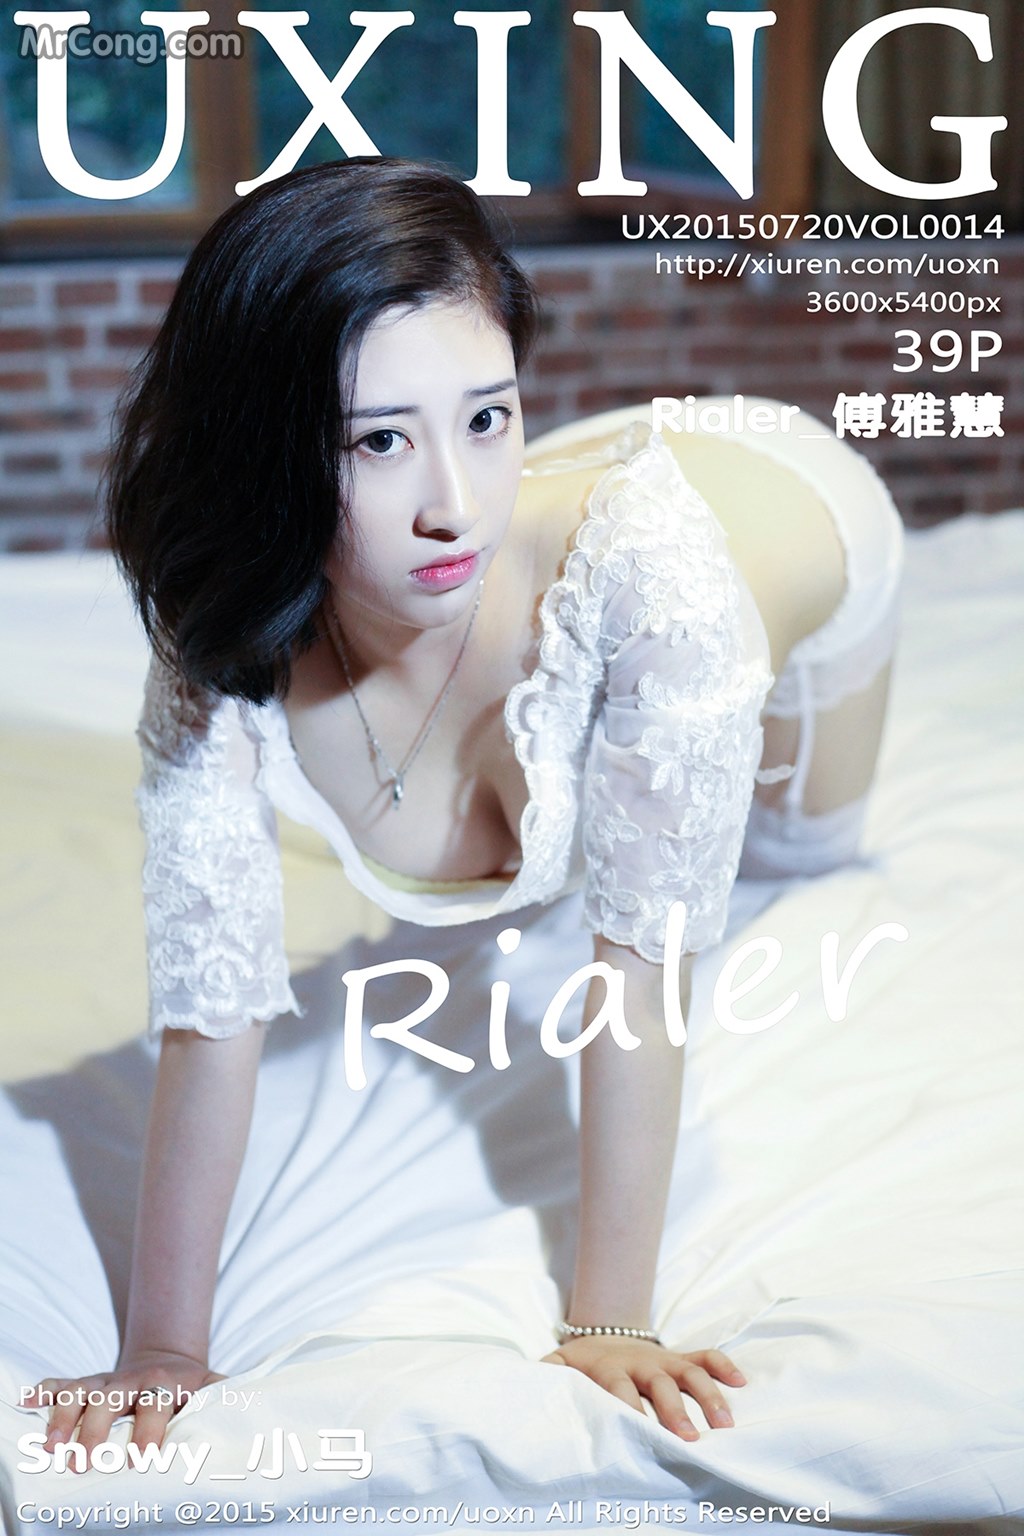 UXING Vol.014: Model Rialer (傅雅慧) (40 photos)